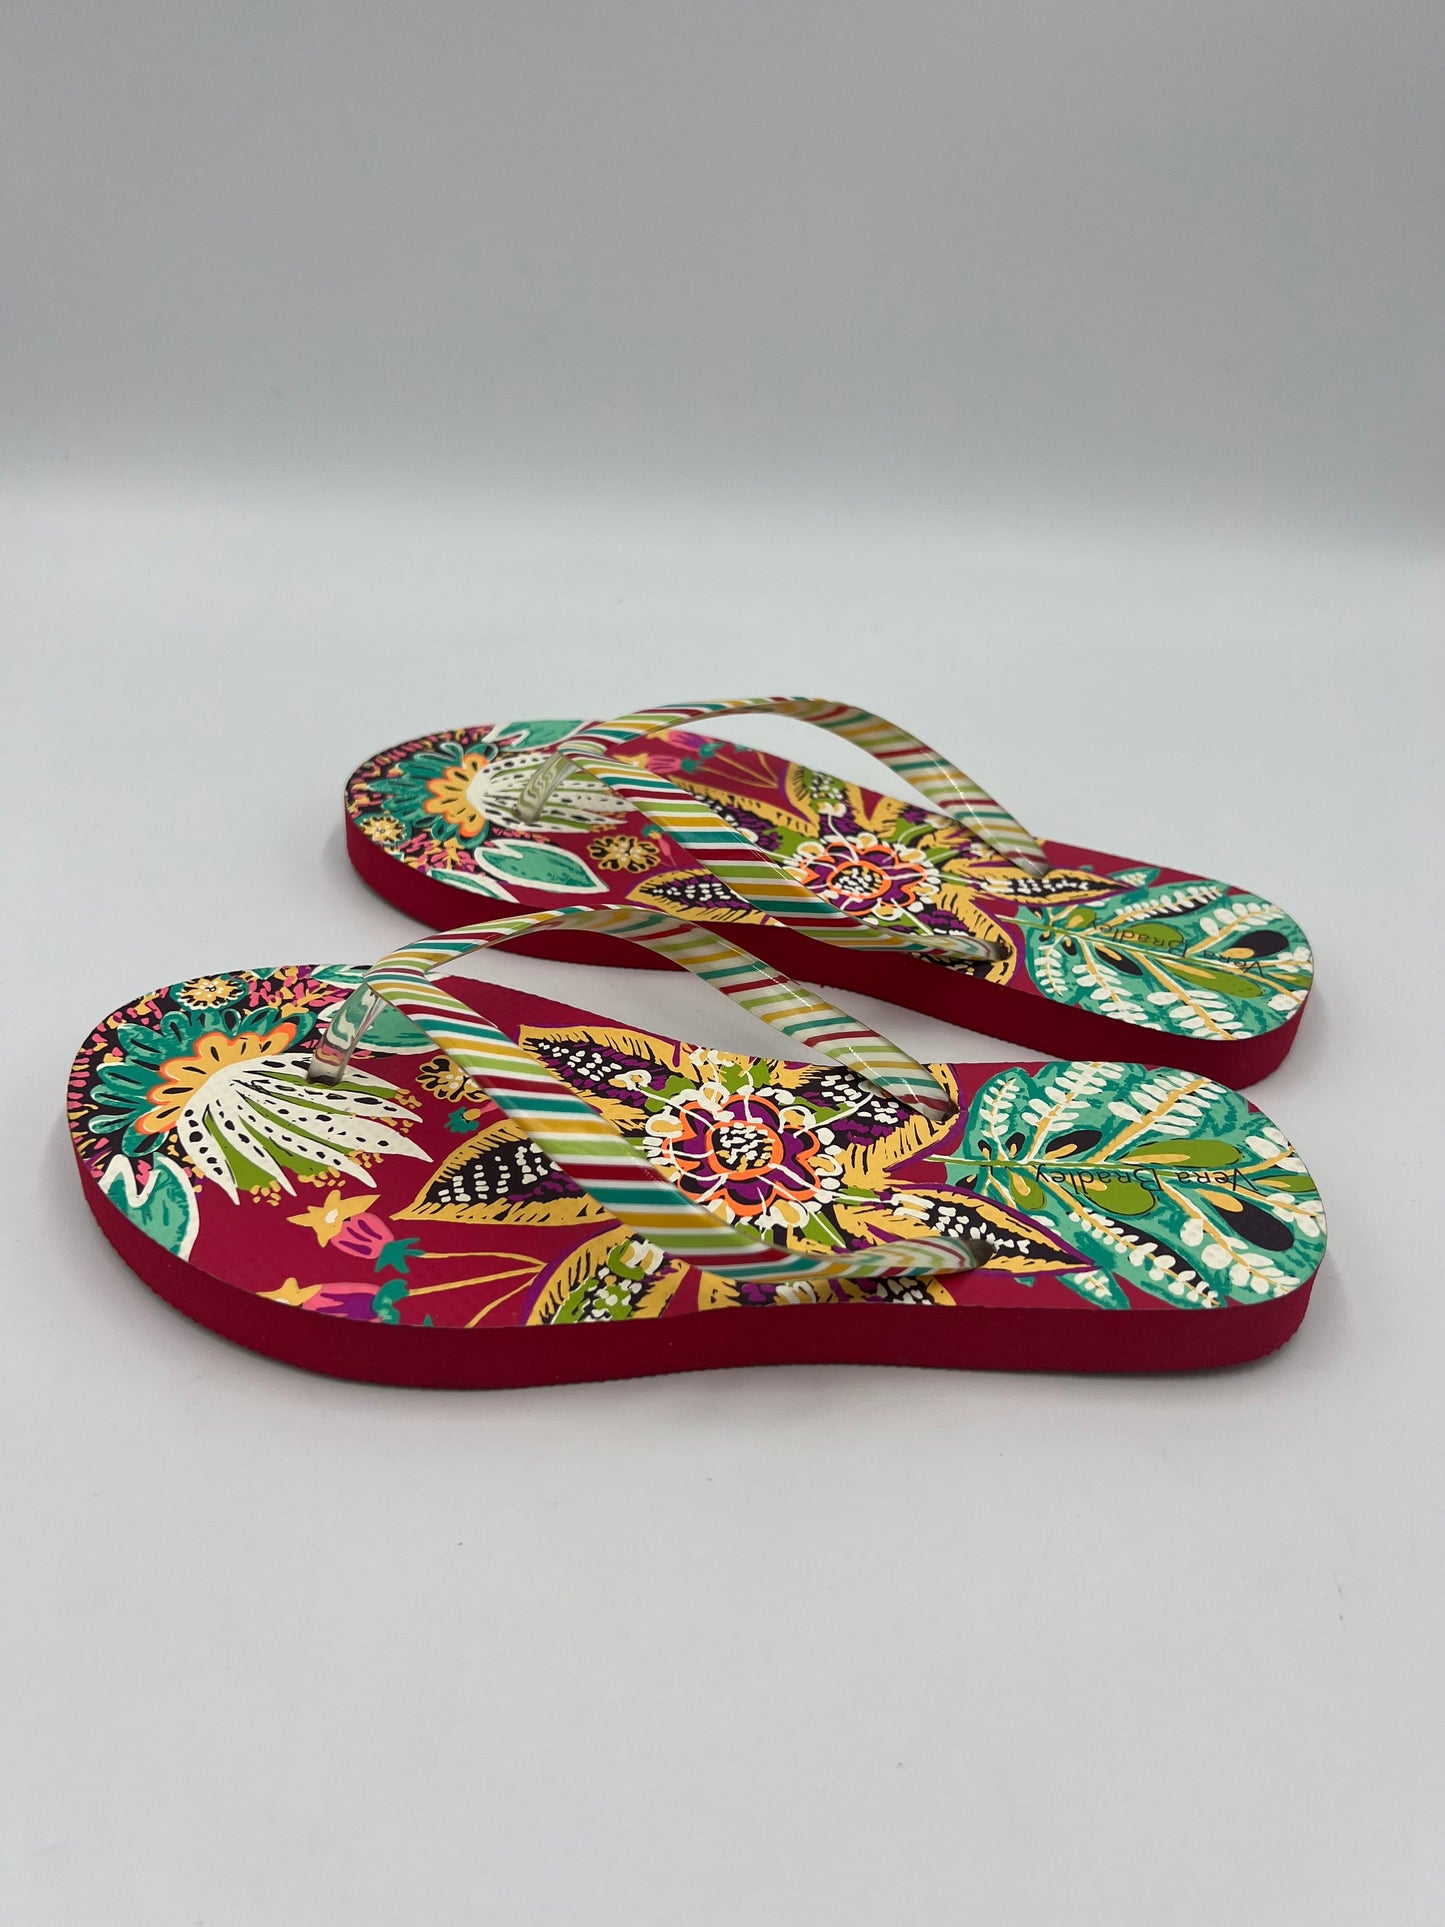 Like New! Sandals Flip Flops By Vera Bradley  Size: 6